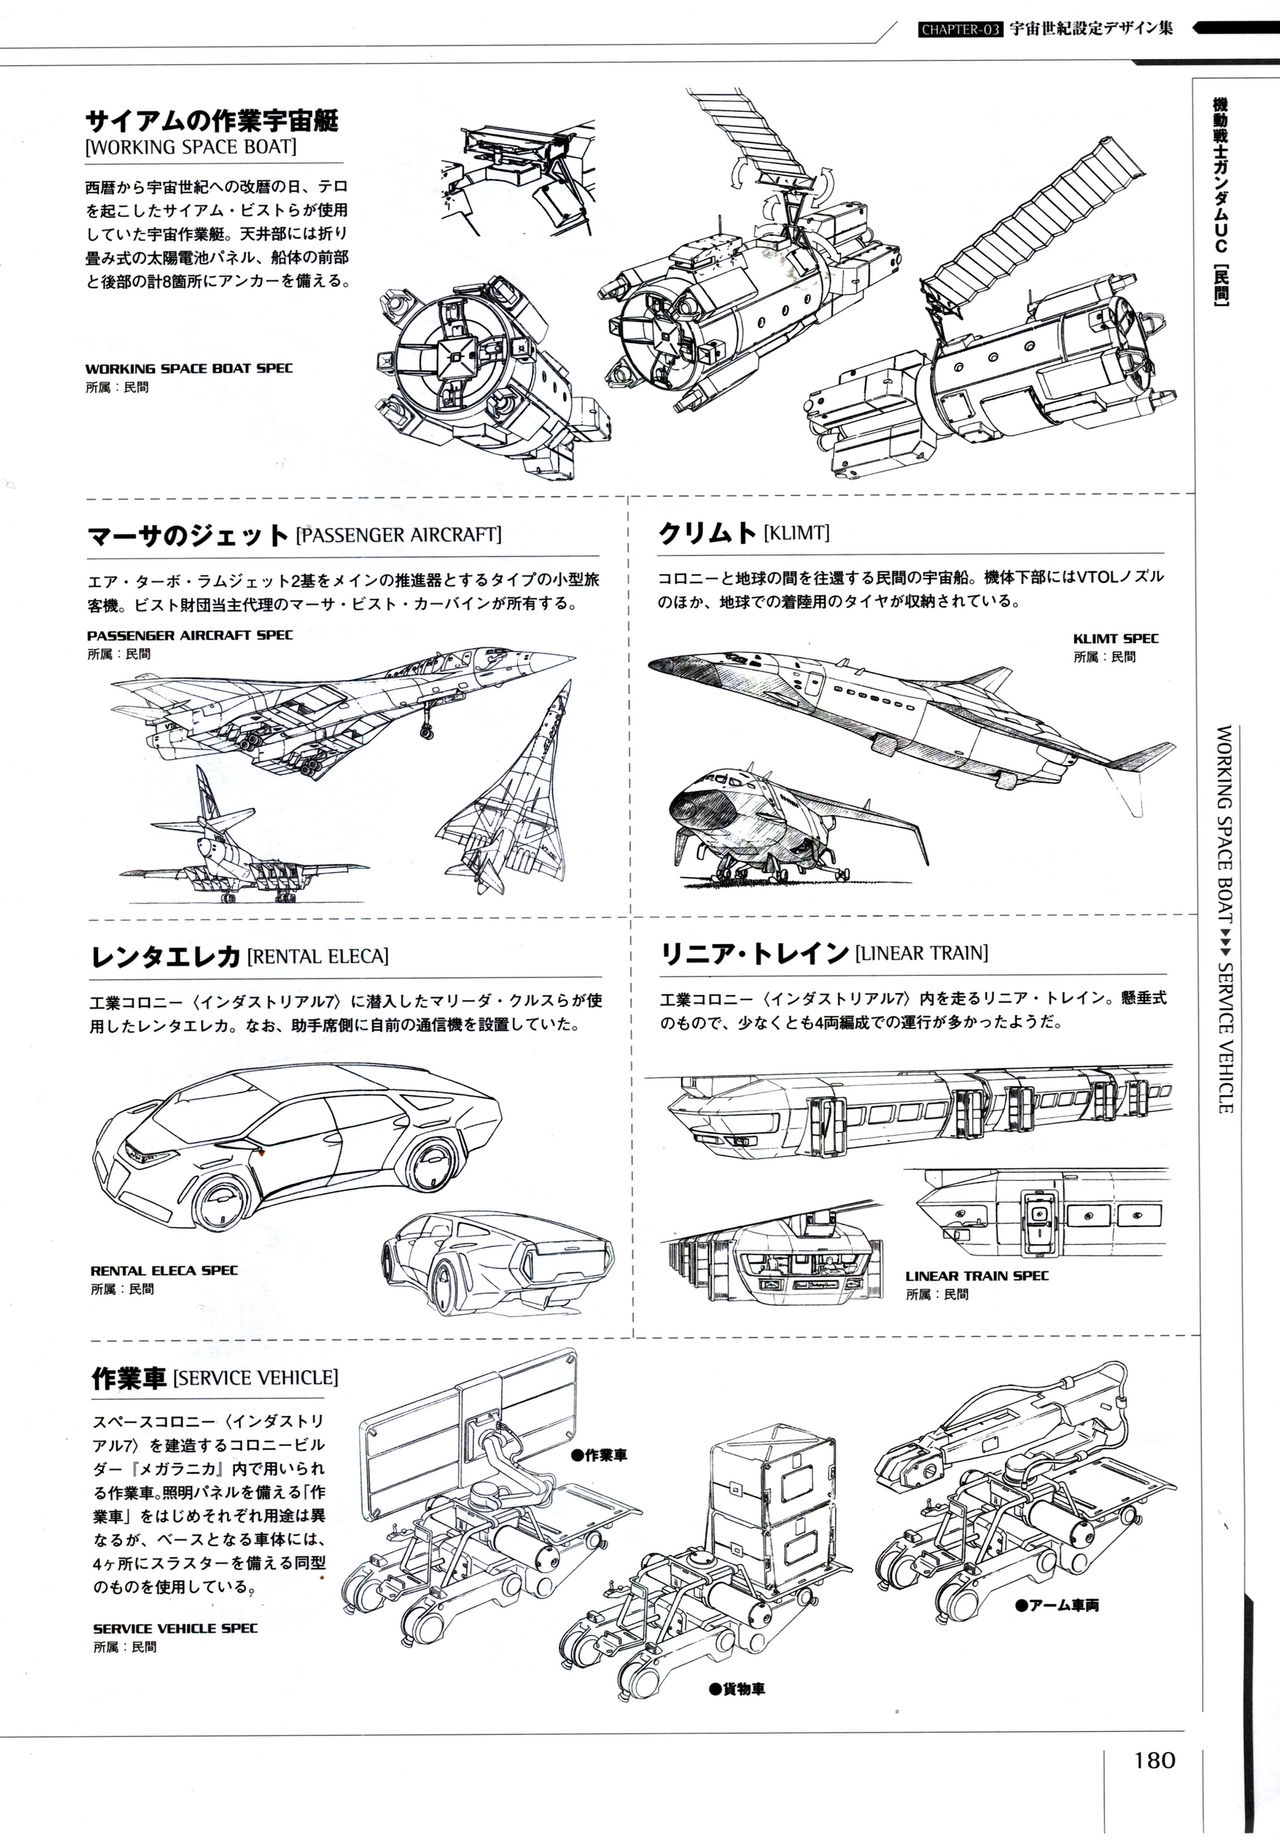 Mobile Suit Gundam - Ship & Aerospace Plane Encyclopedia - Revised Edition 185